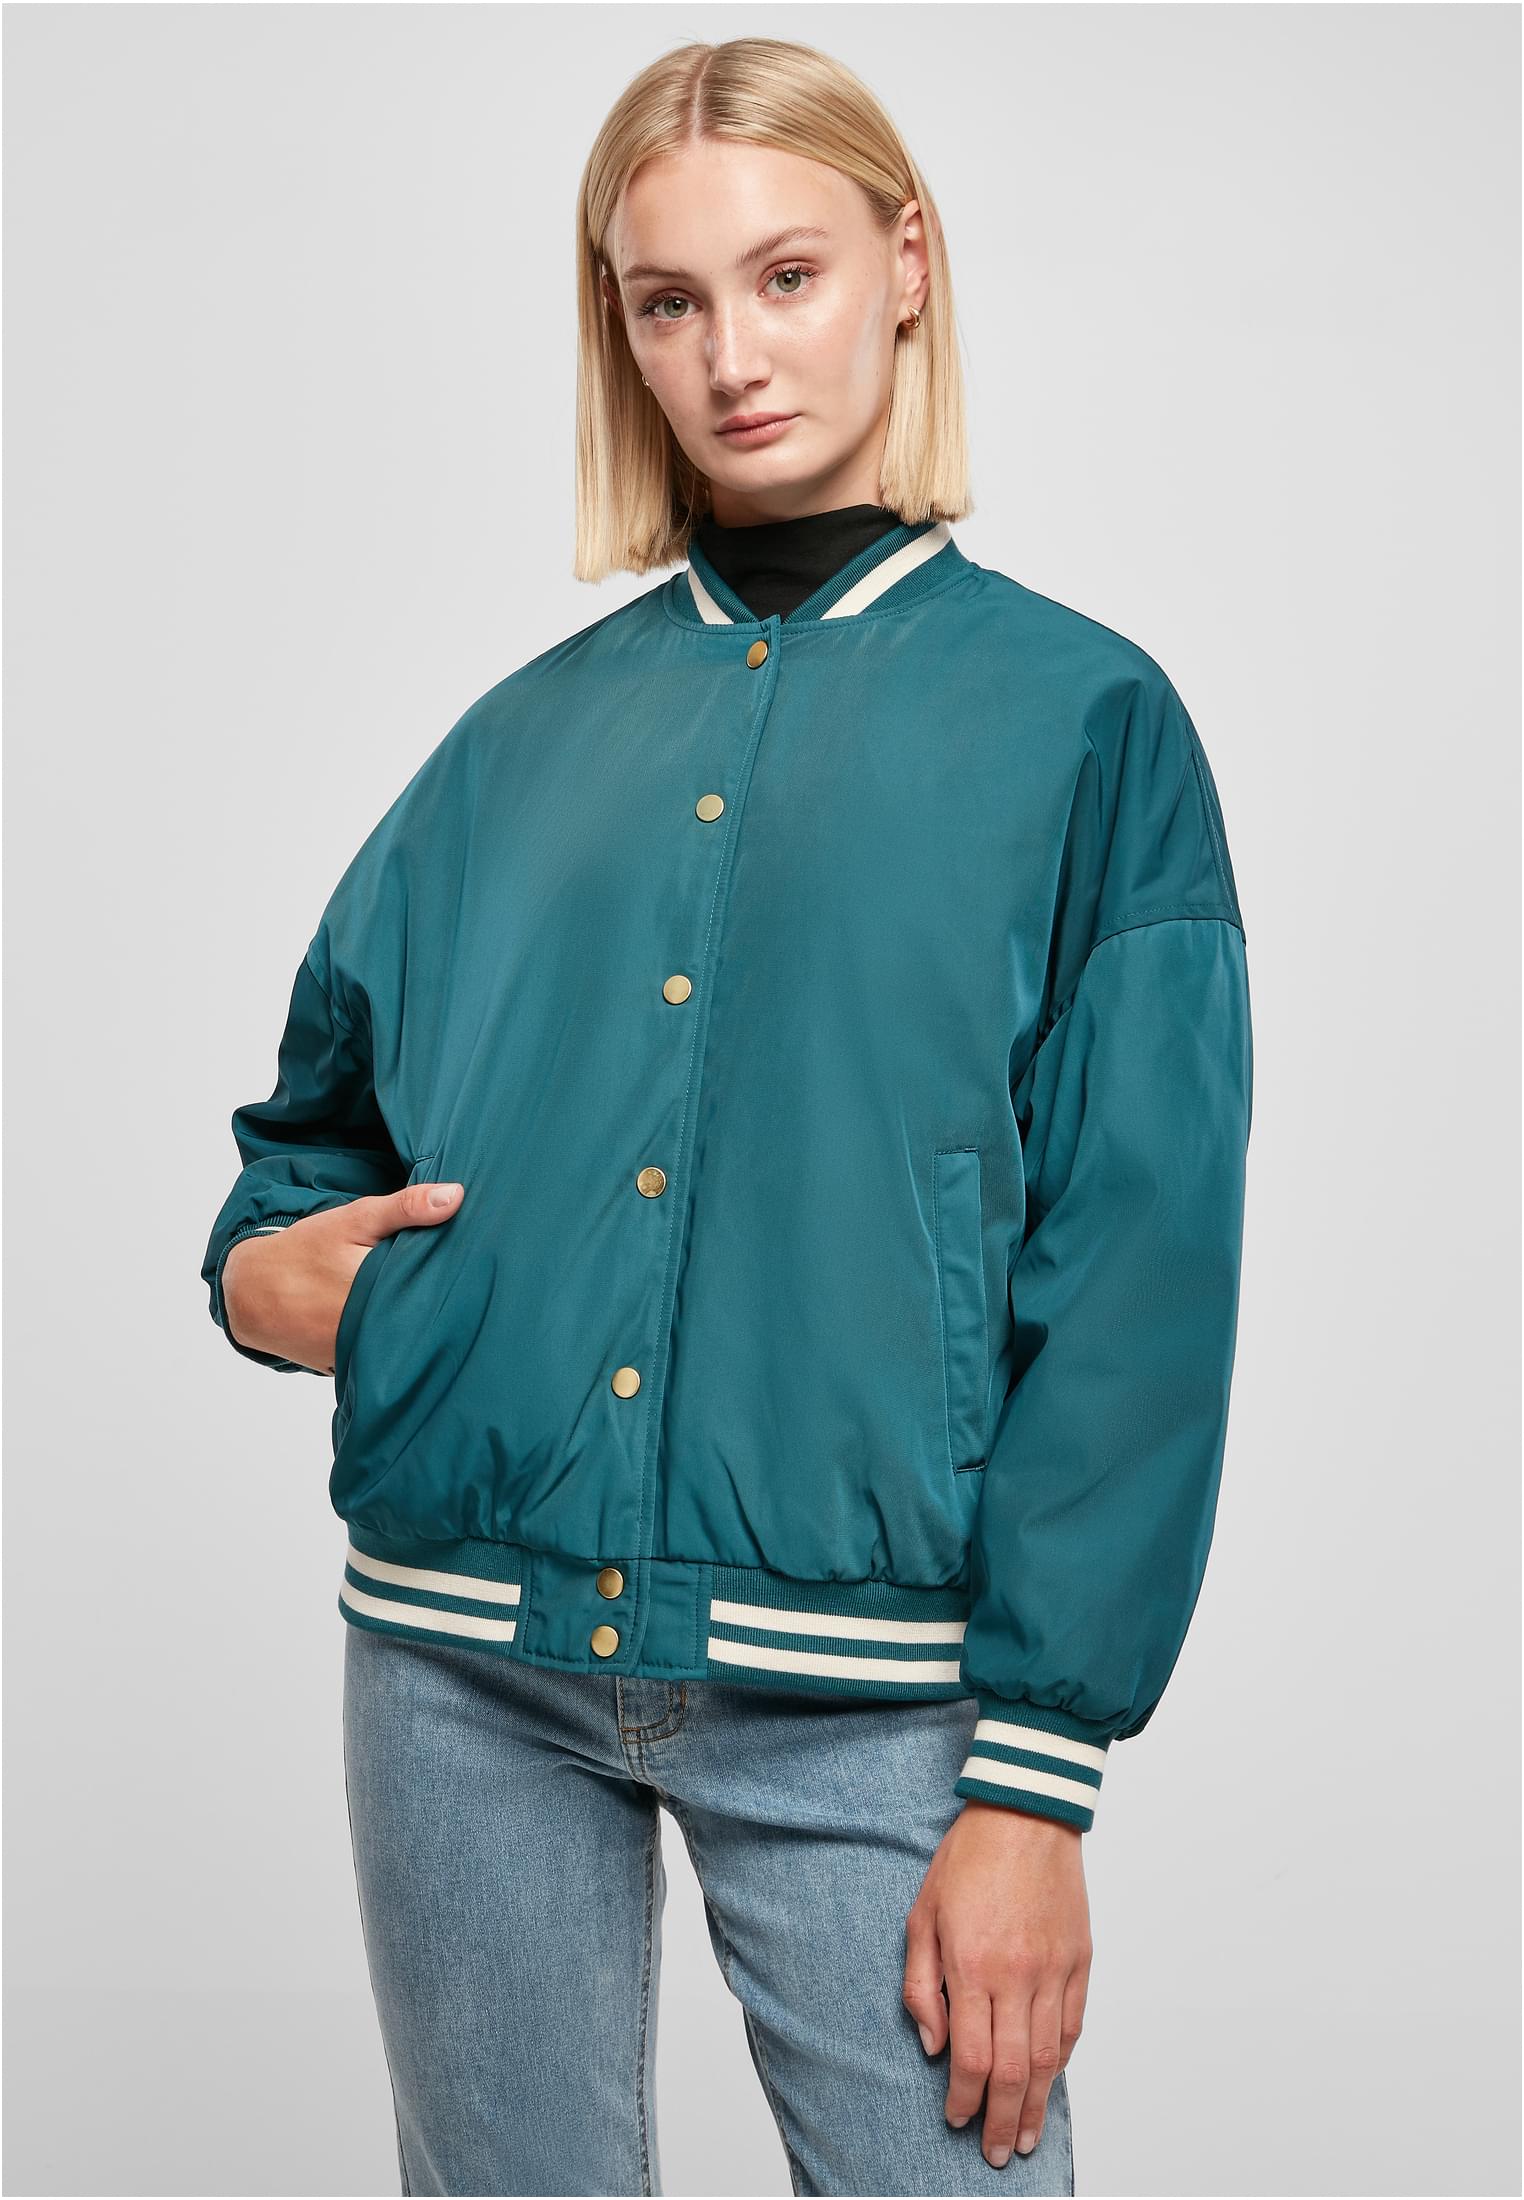 Women's Oversized Recycled College Jacket Jasper